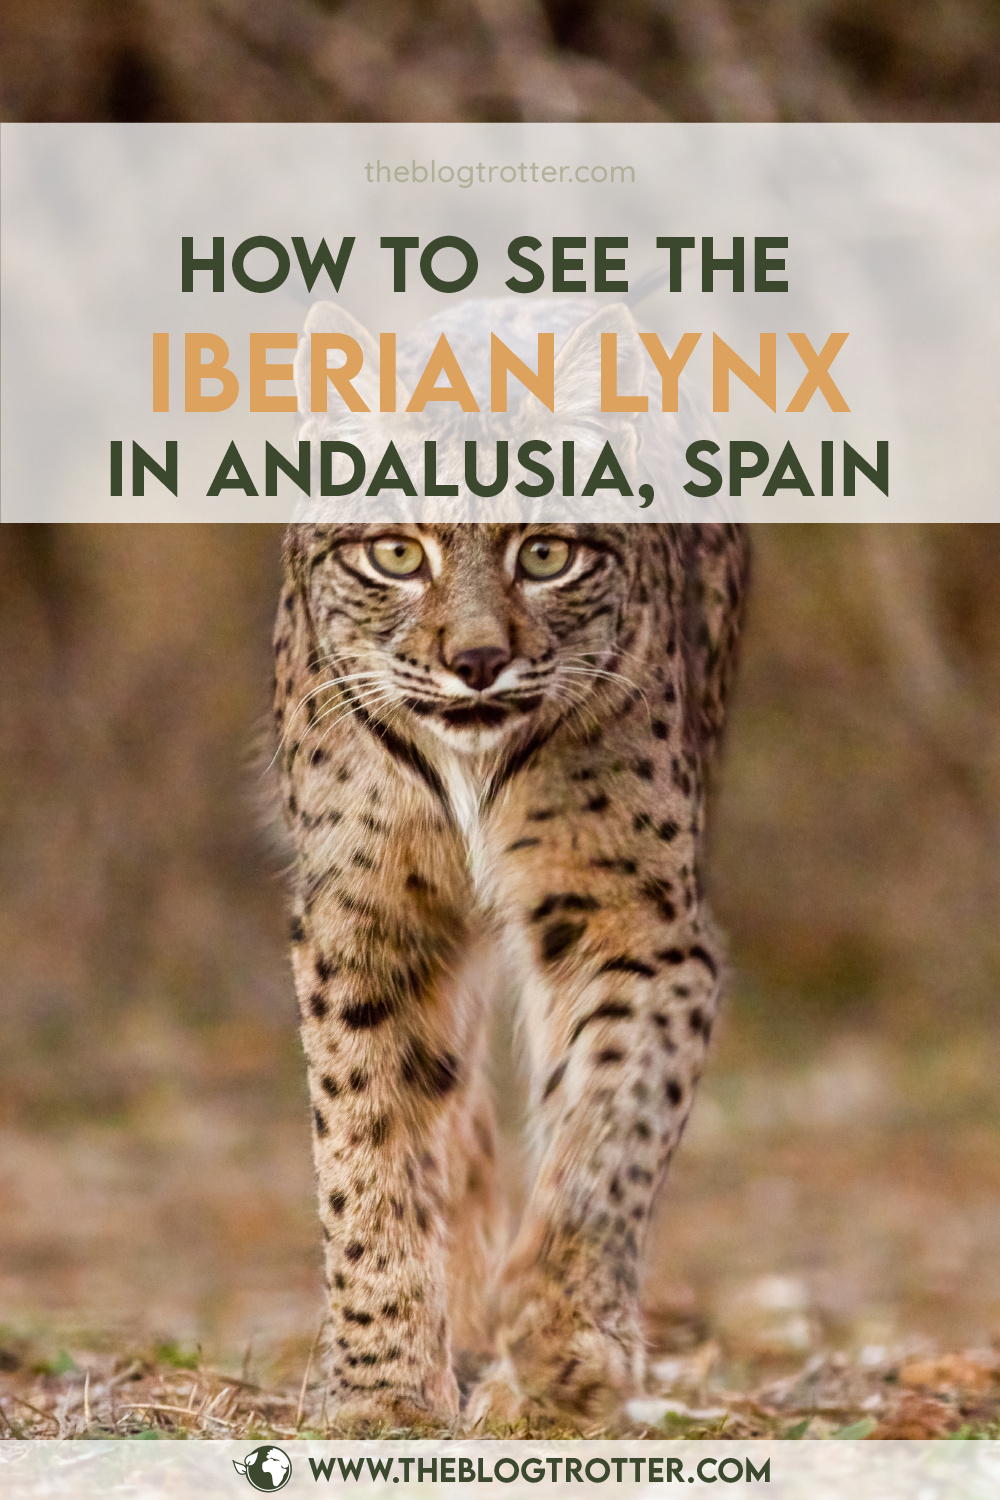 Iberian Lynx article visual for Pinterest - Option 1